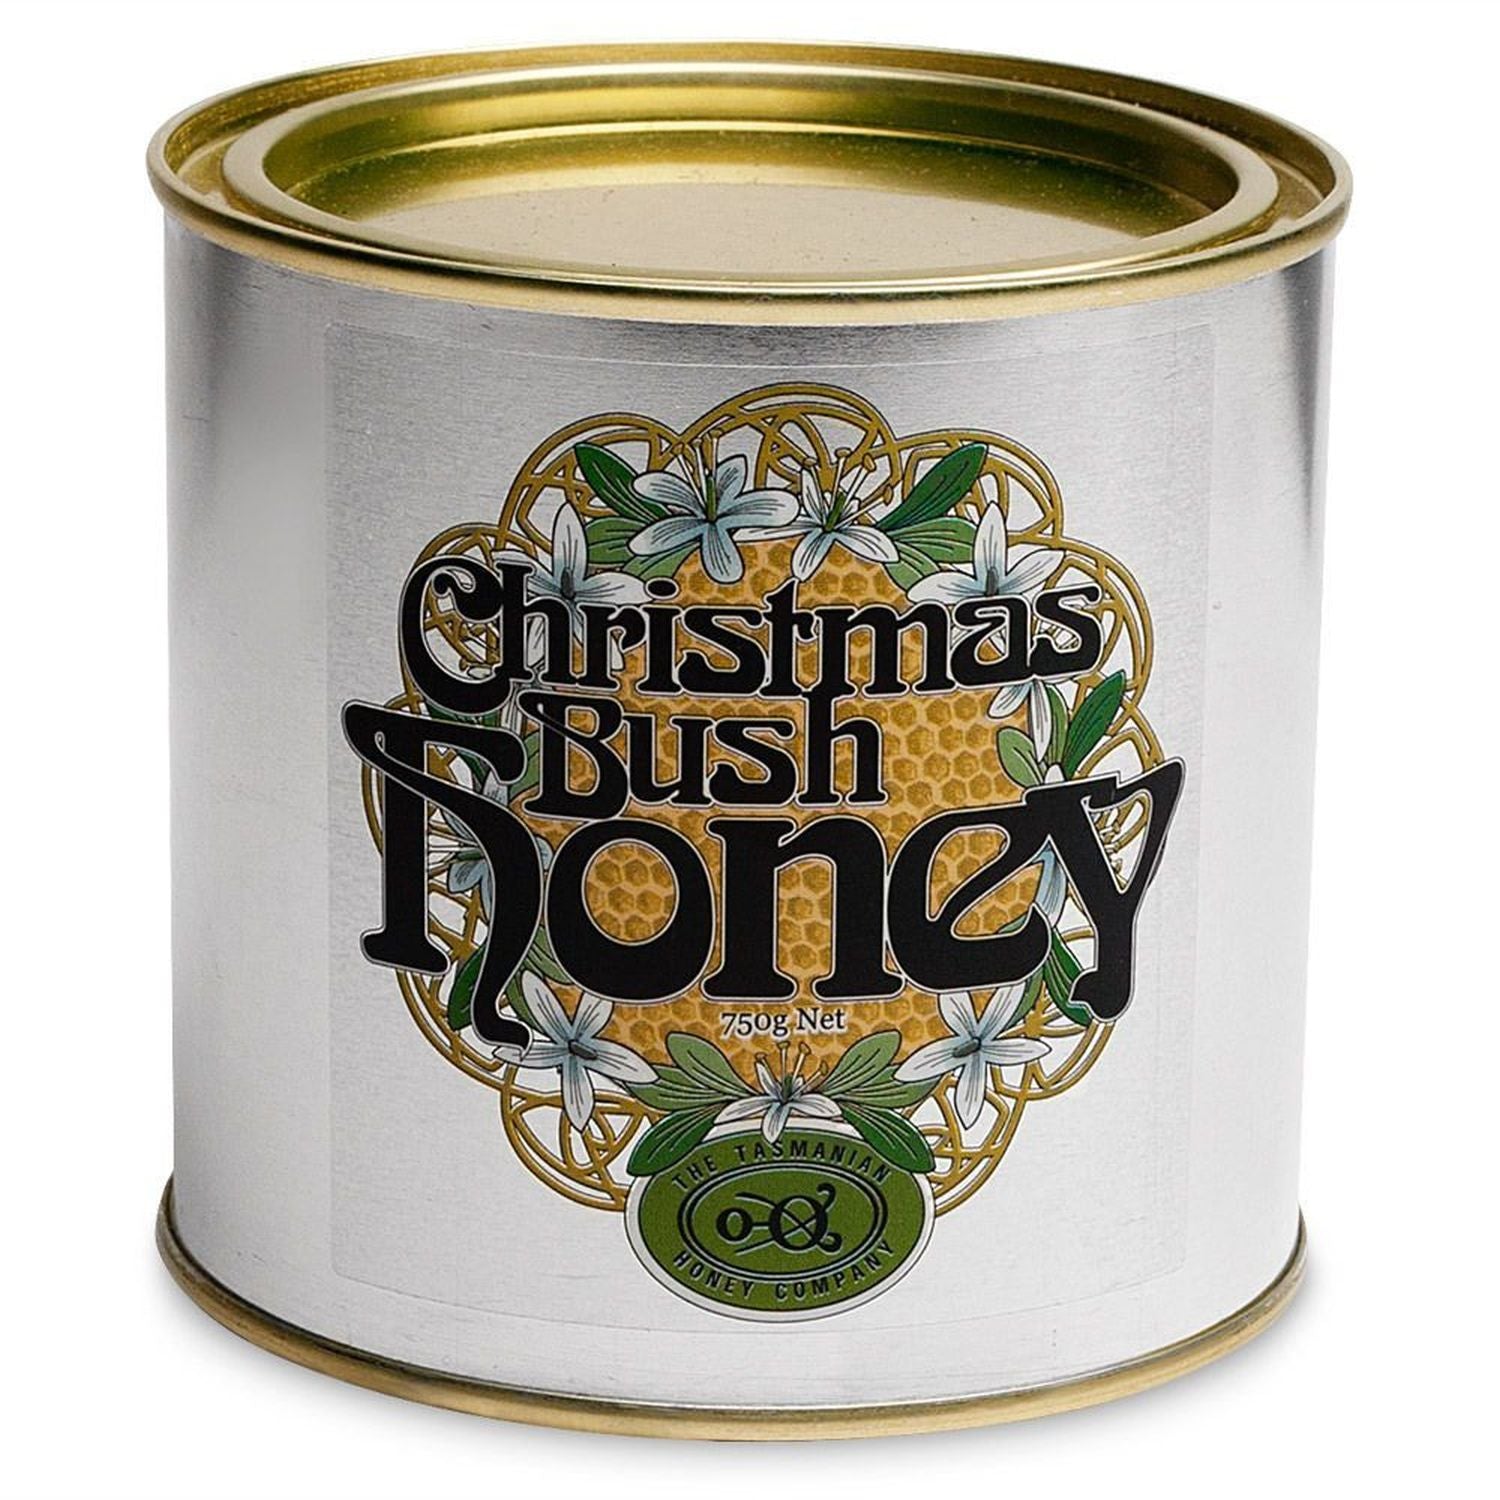 Tasmanian  Christmas Bush honey in a 750gms tin